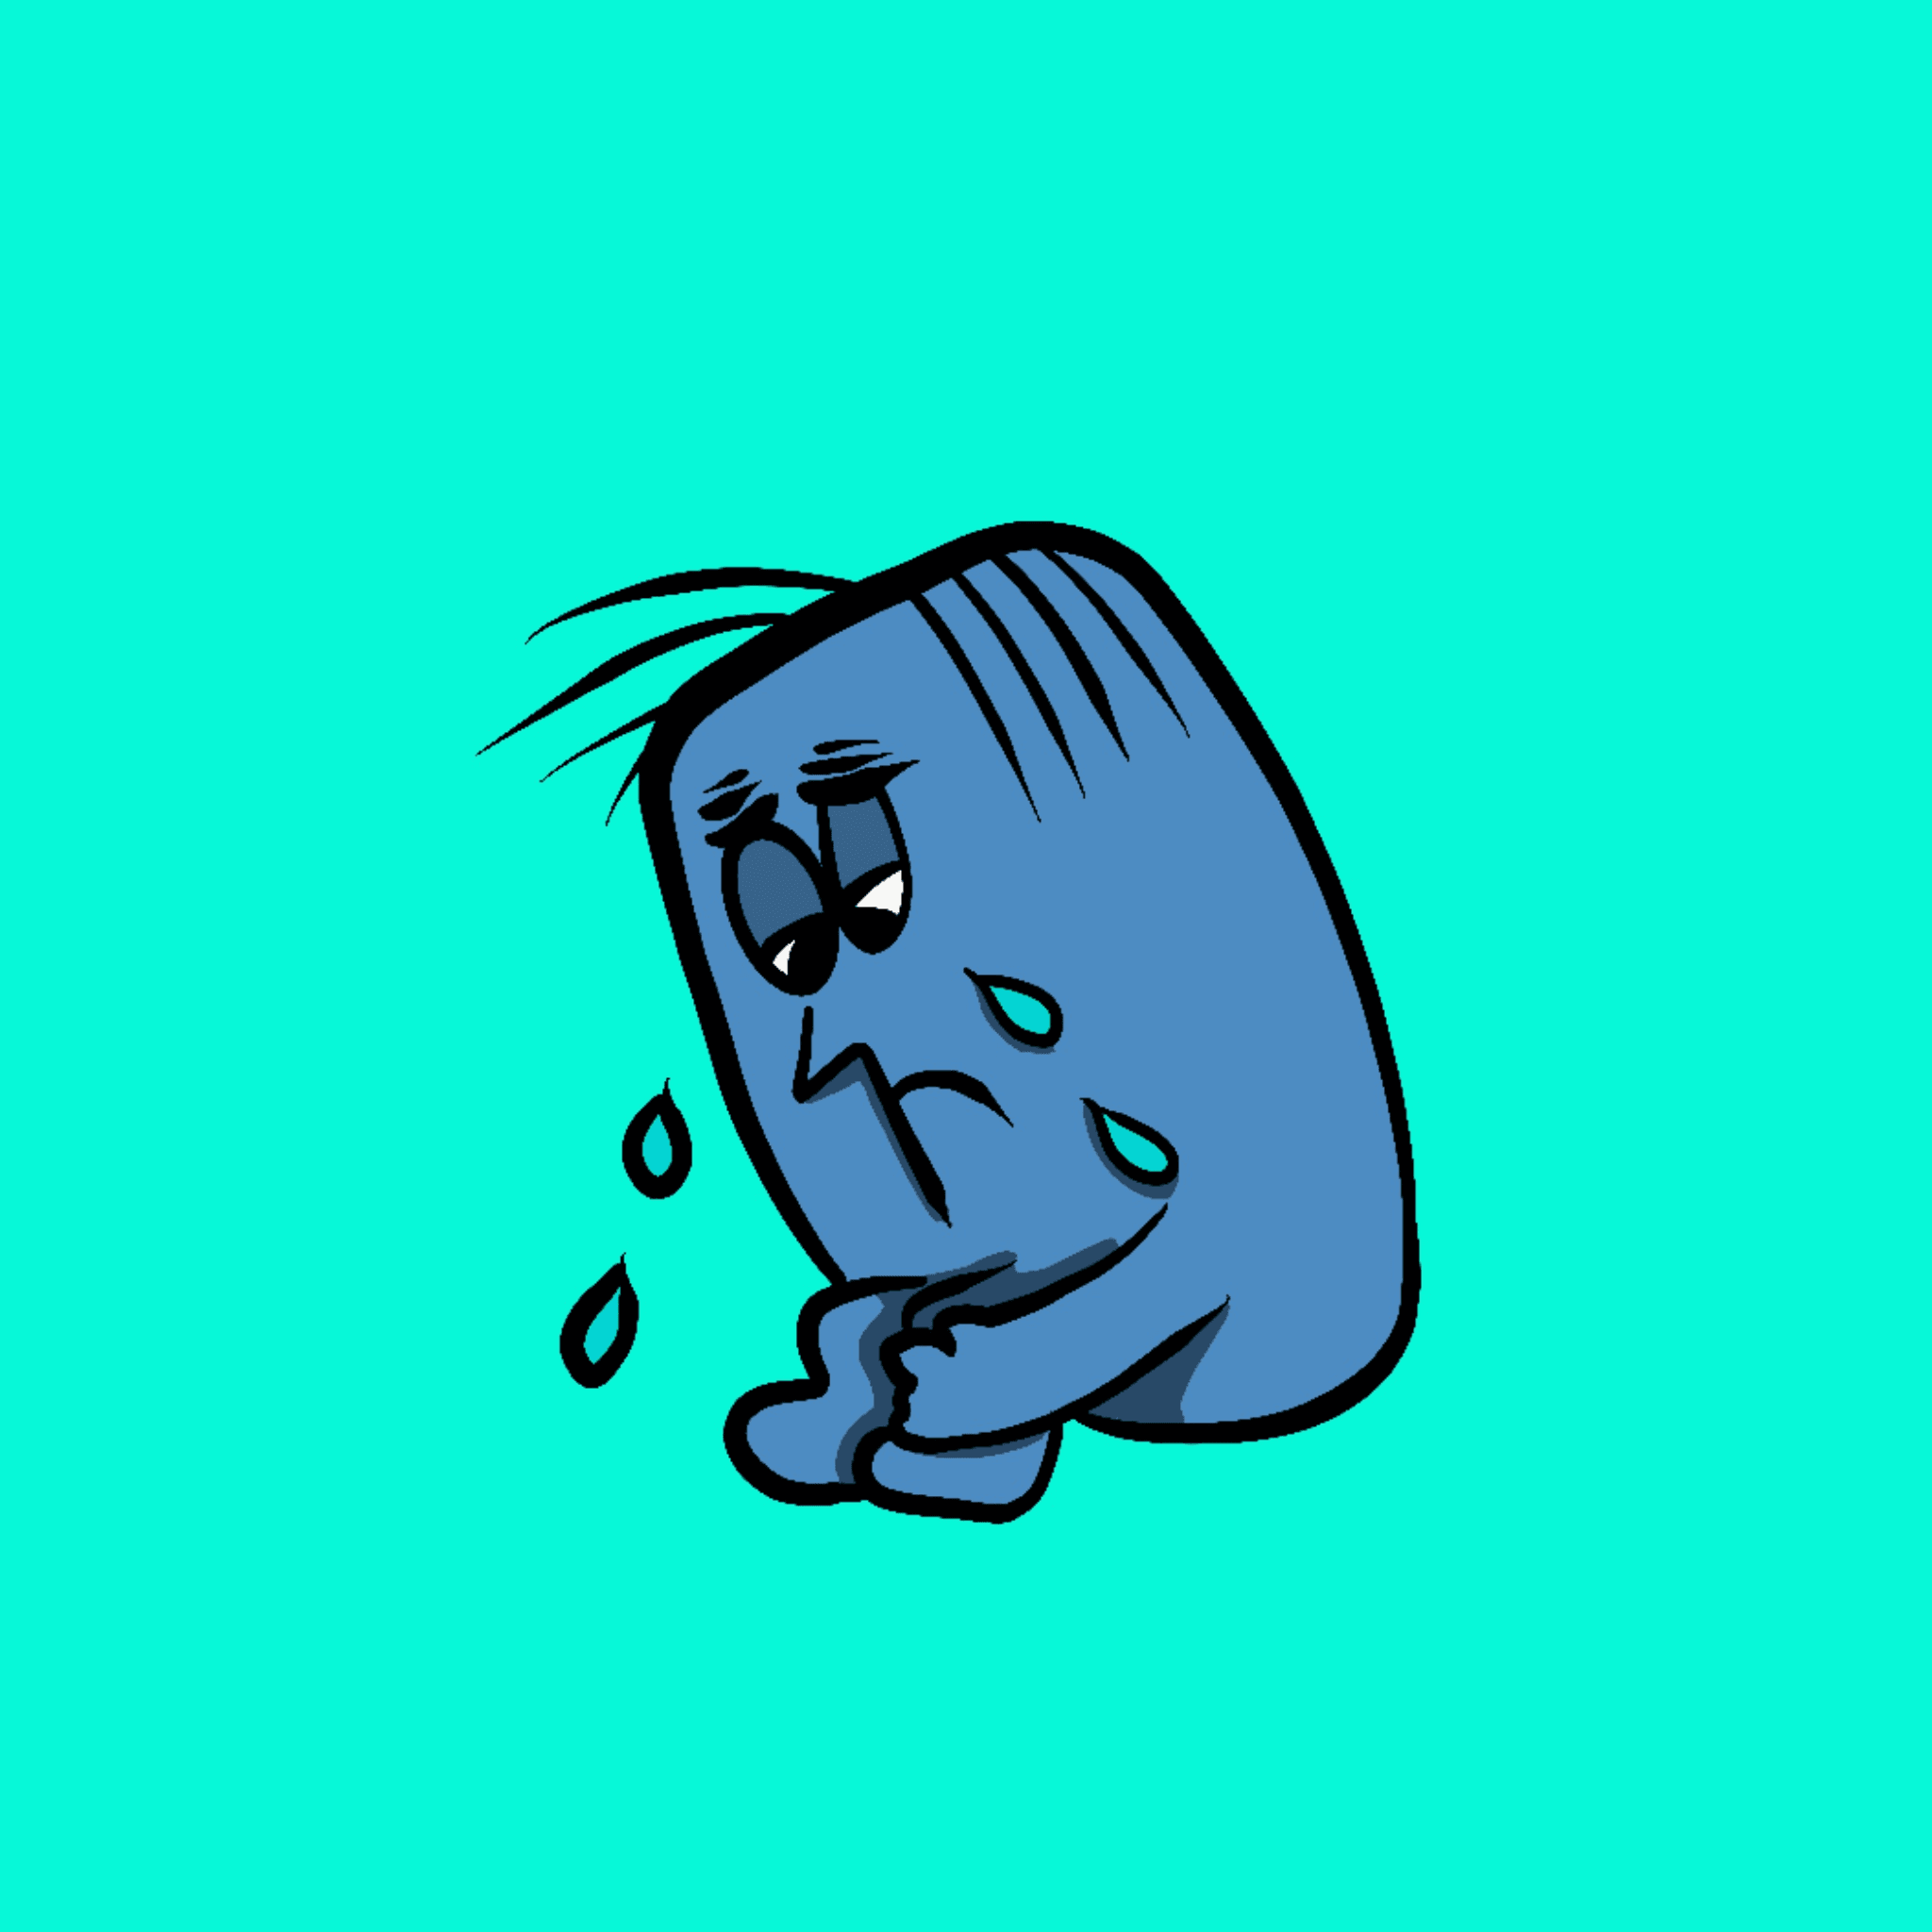 Depressed Monster